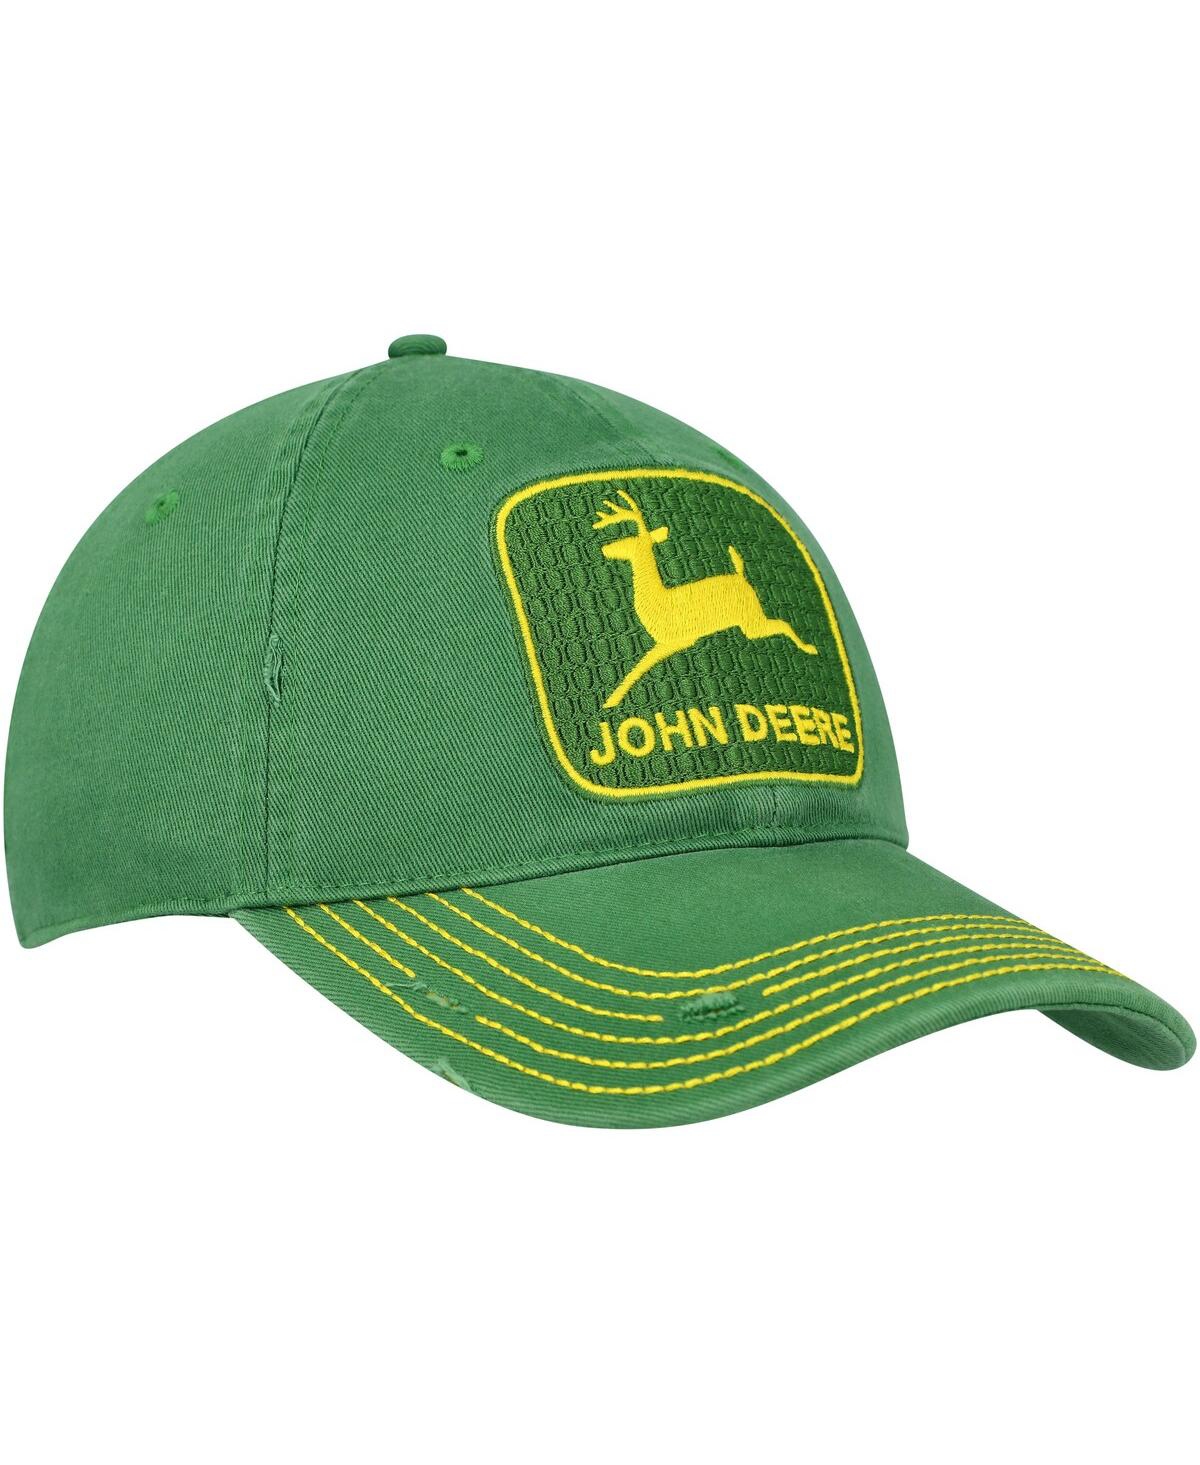 Shop Top Of The World Men's  Green John Deere Classic Vintage-like Twill Adjustable Hat